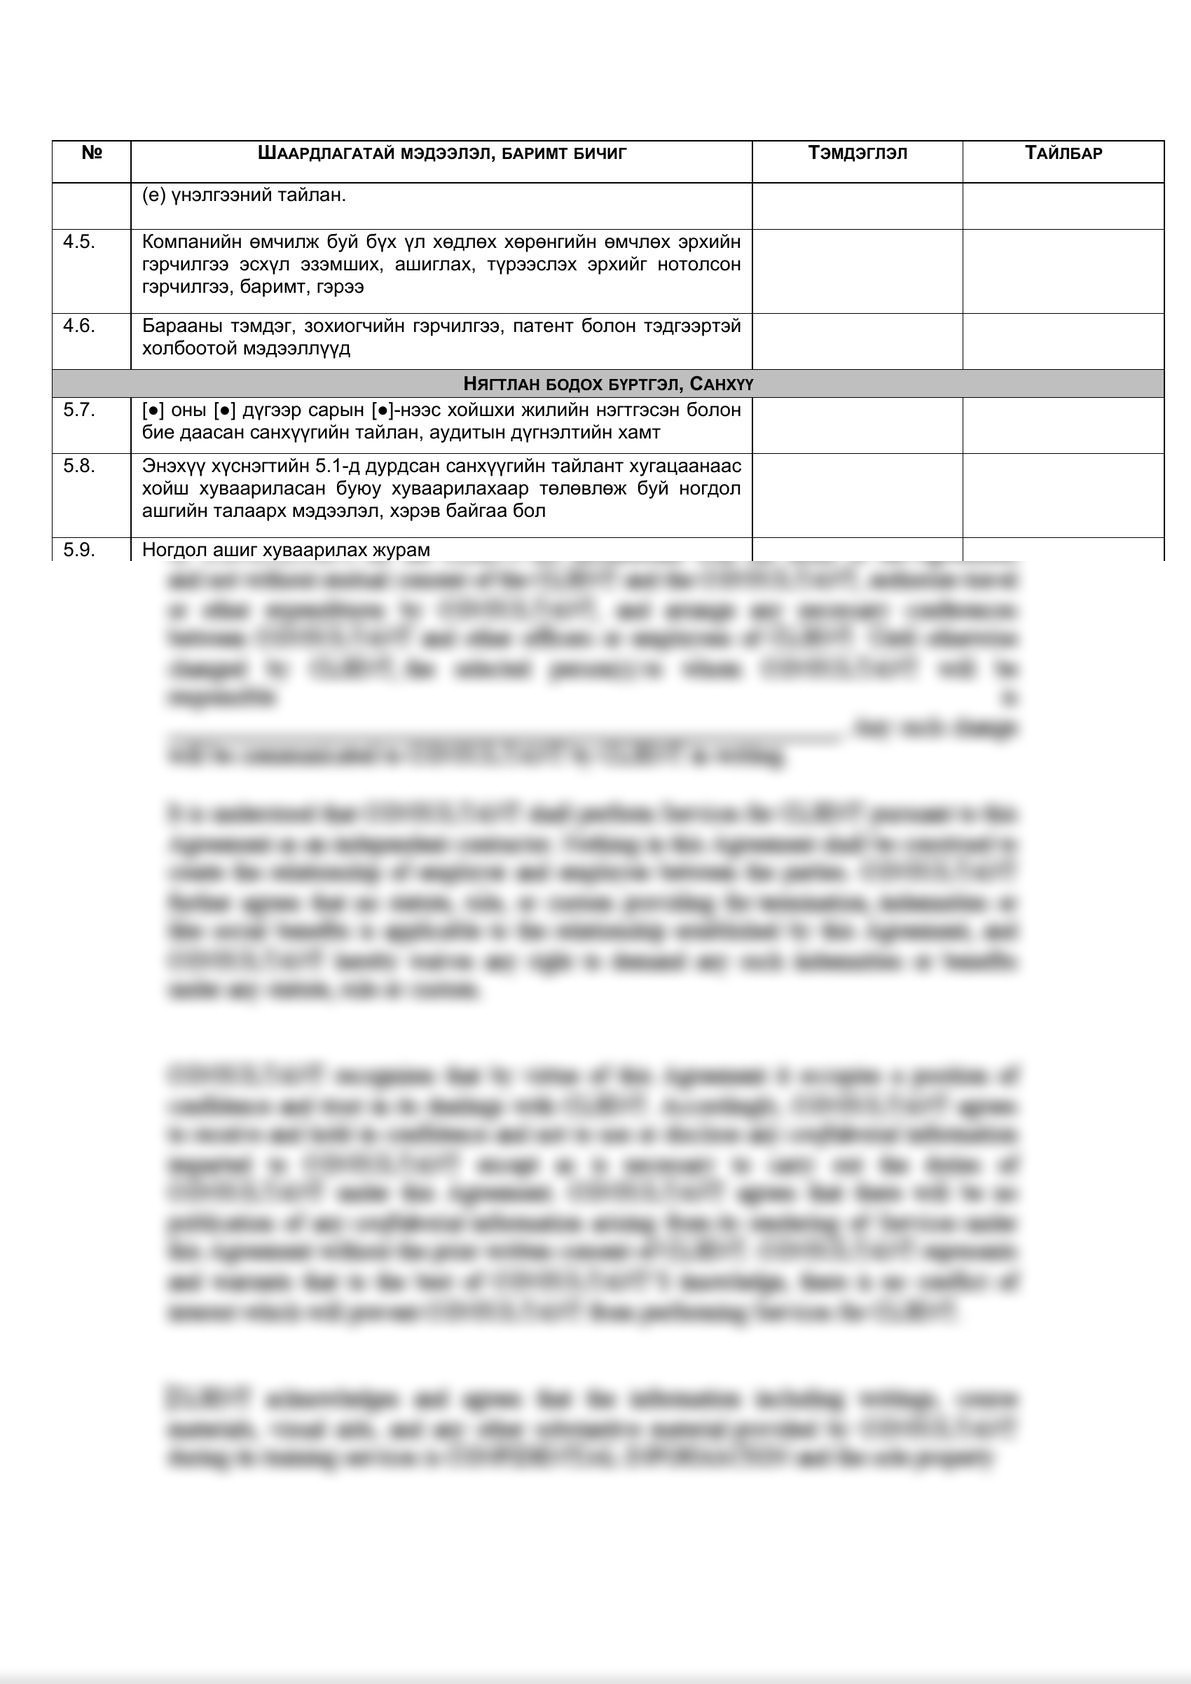 Legal due diligence checklist (Mongolian legal entities)    -8